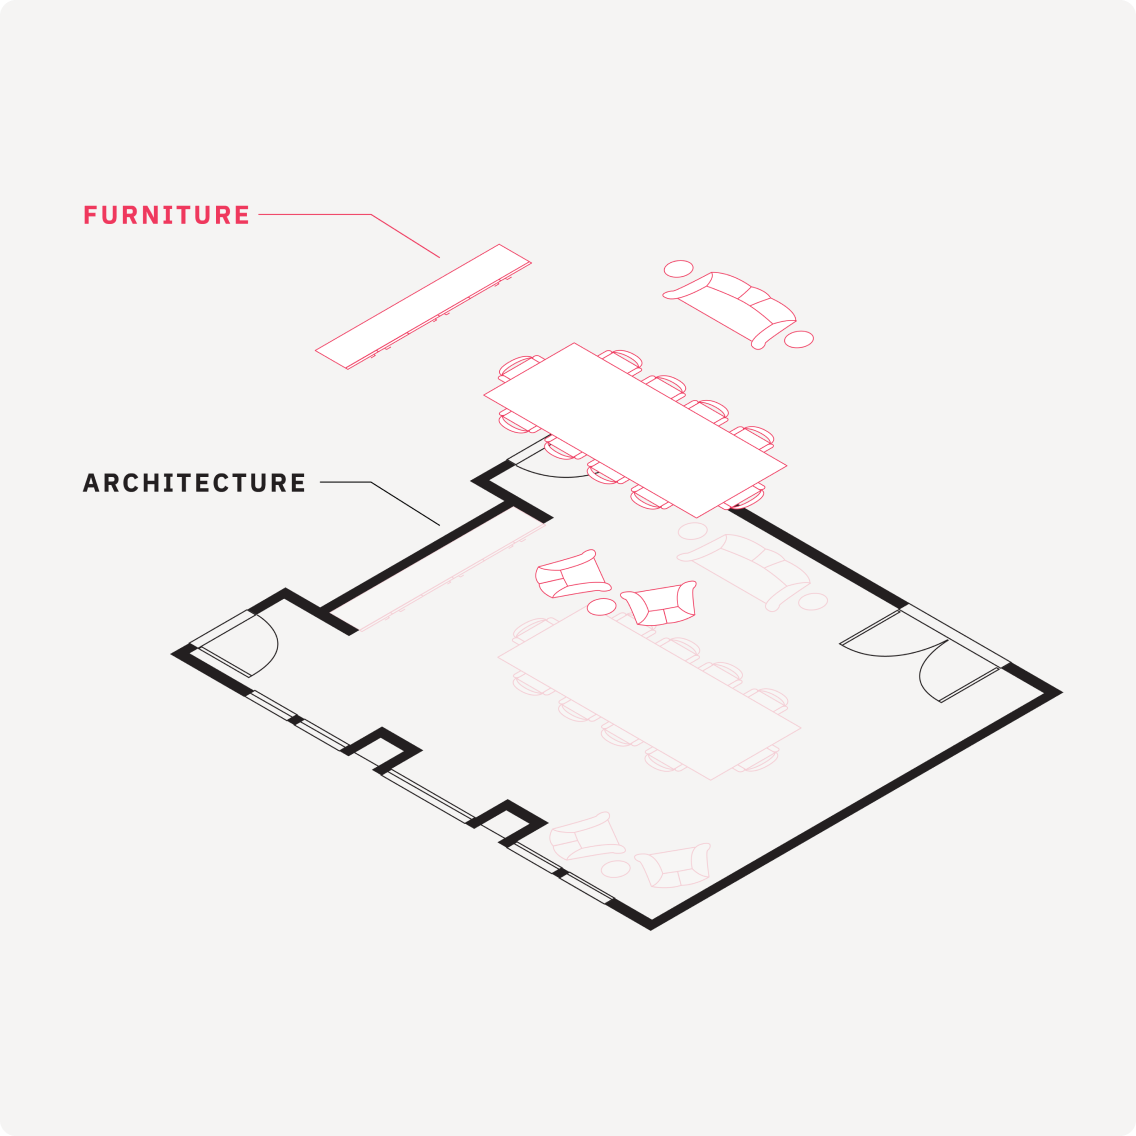 CAD - Architecture Furniture